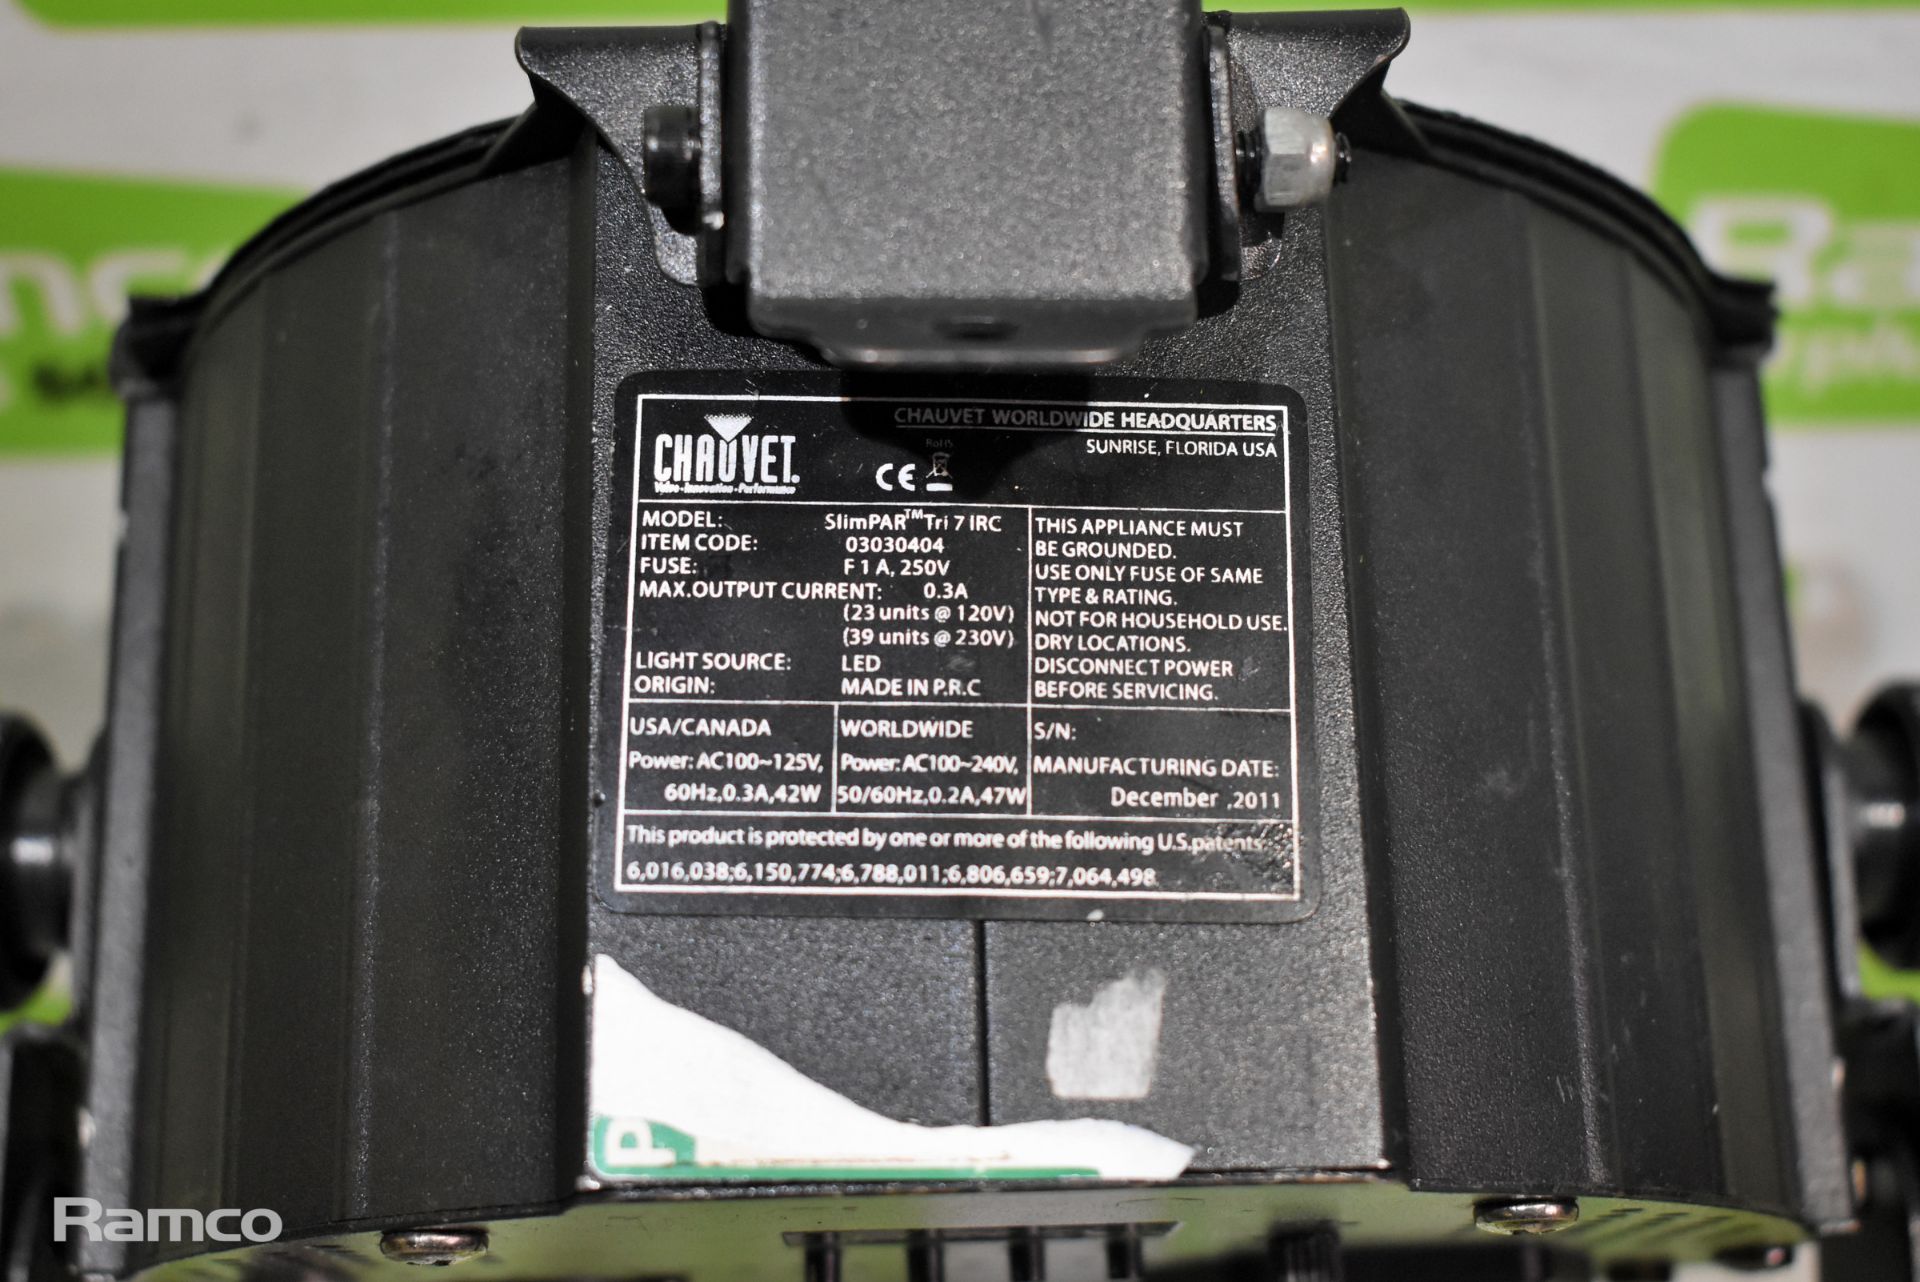 6x Chauvet LED SlimPar Tri7 IRC in flight case - Image 6 of 8